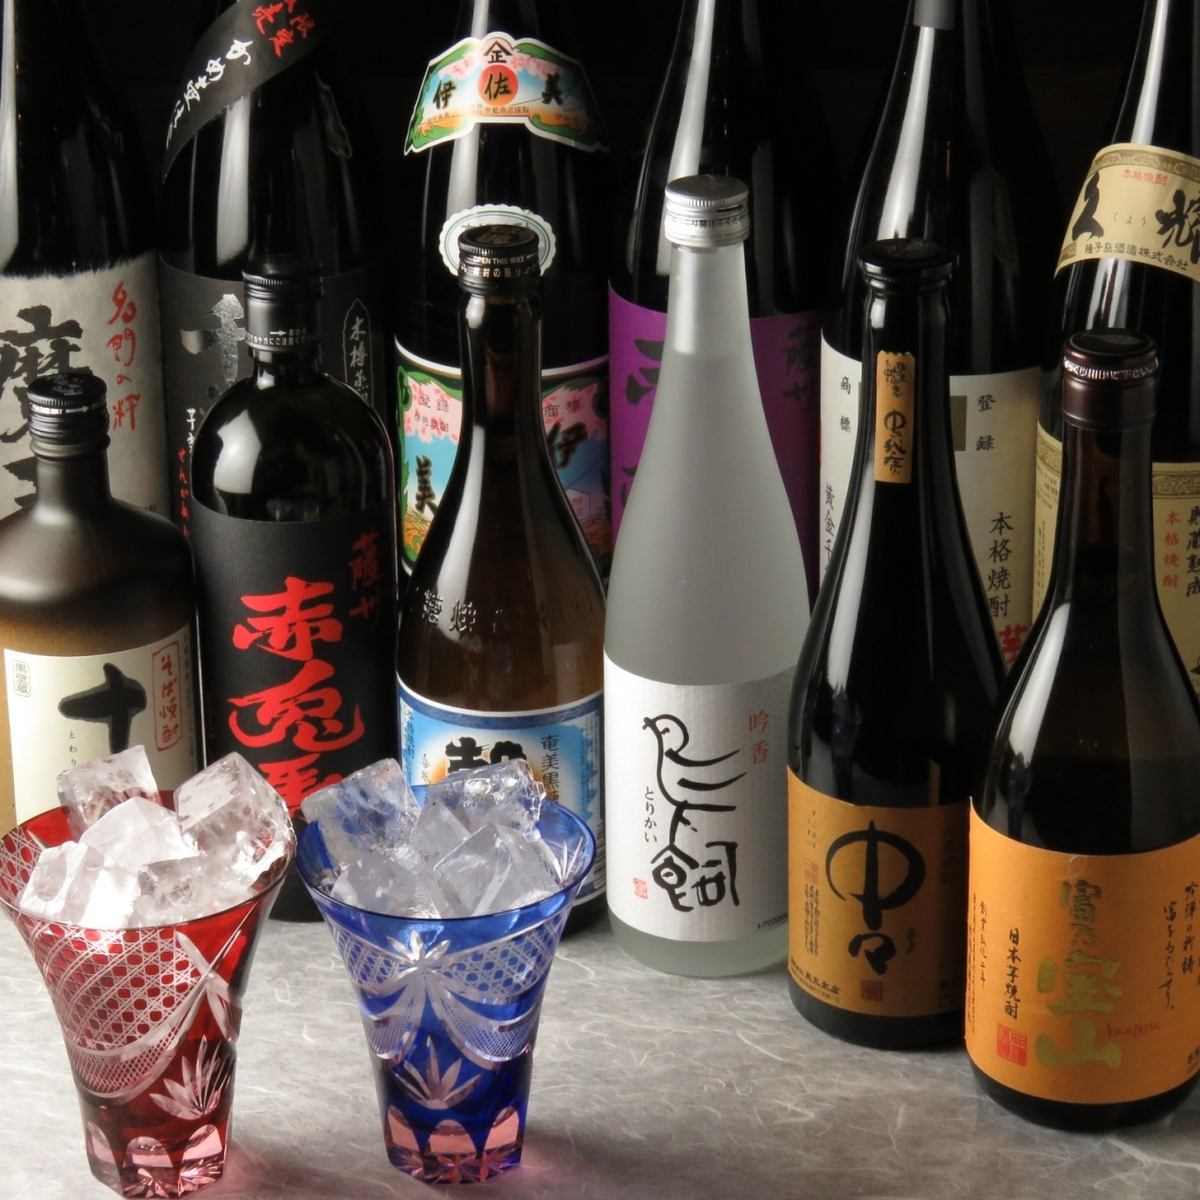 Enjoy carefully selected sake, shochu and fresh seafood!